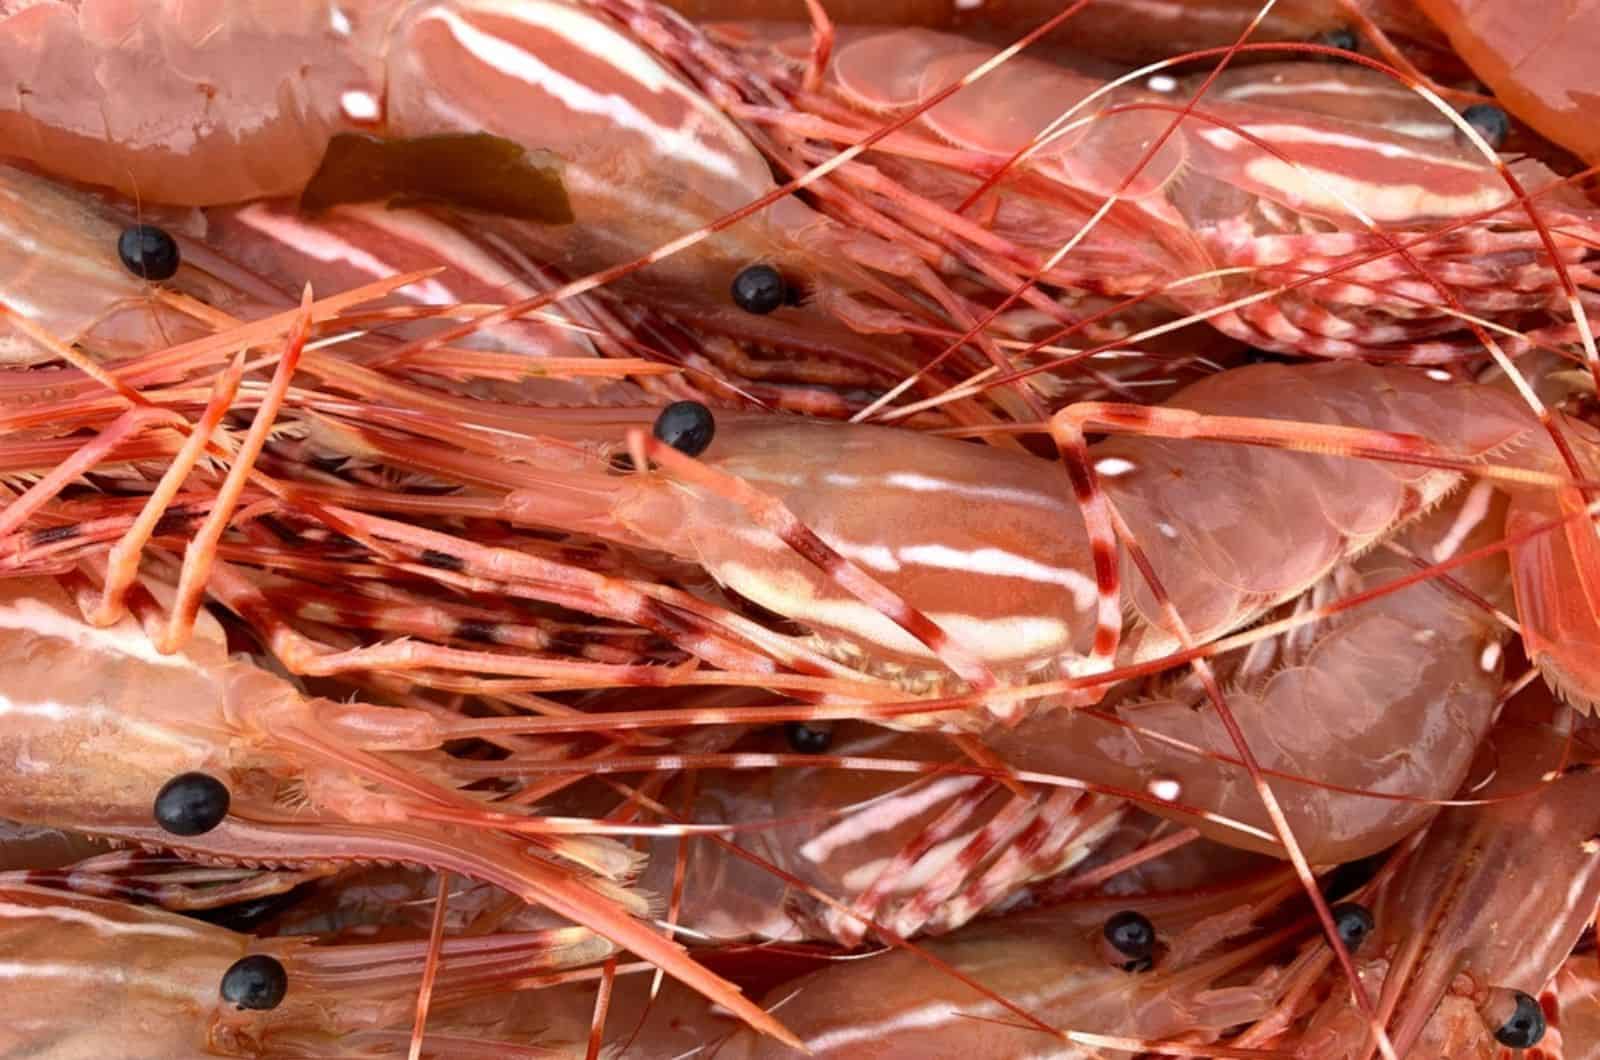 a bunch of shrimps